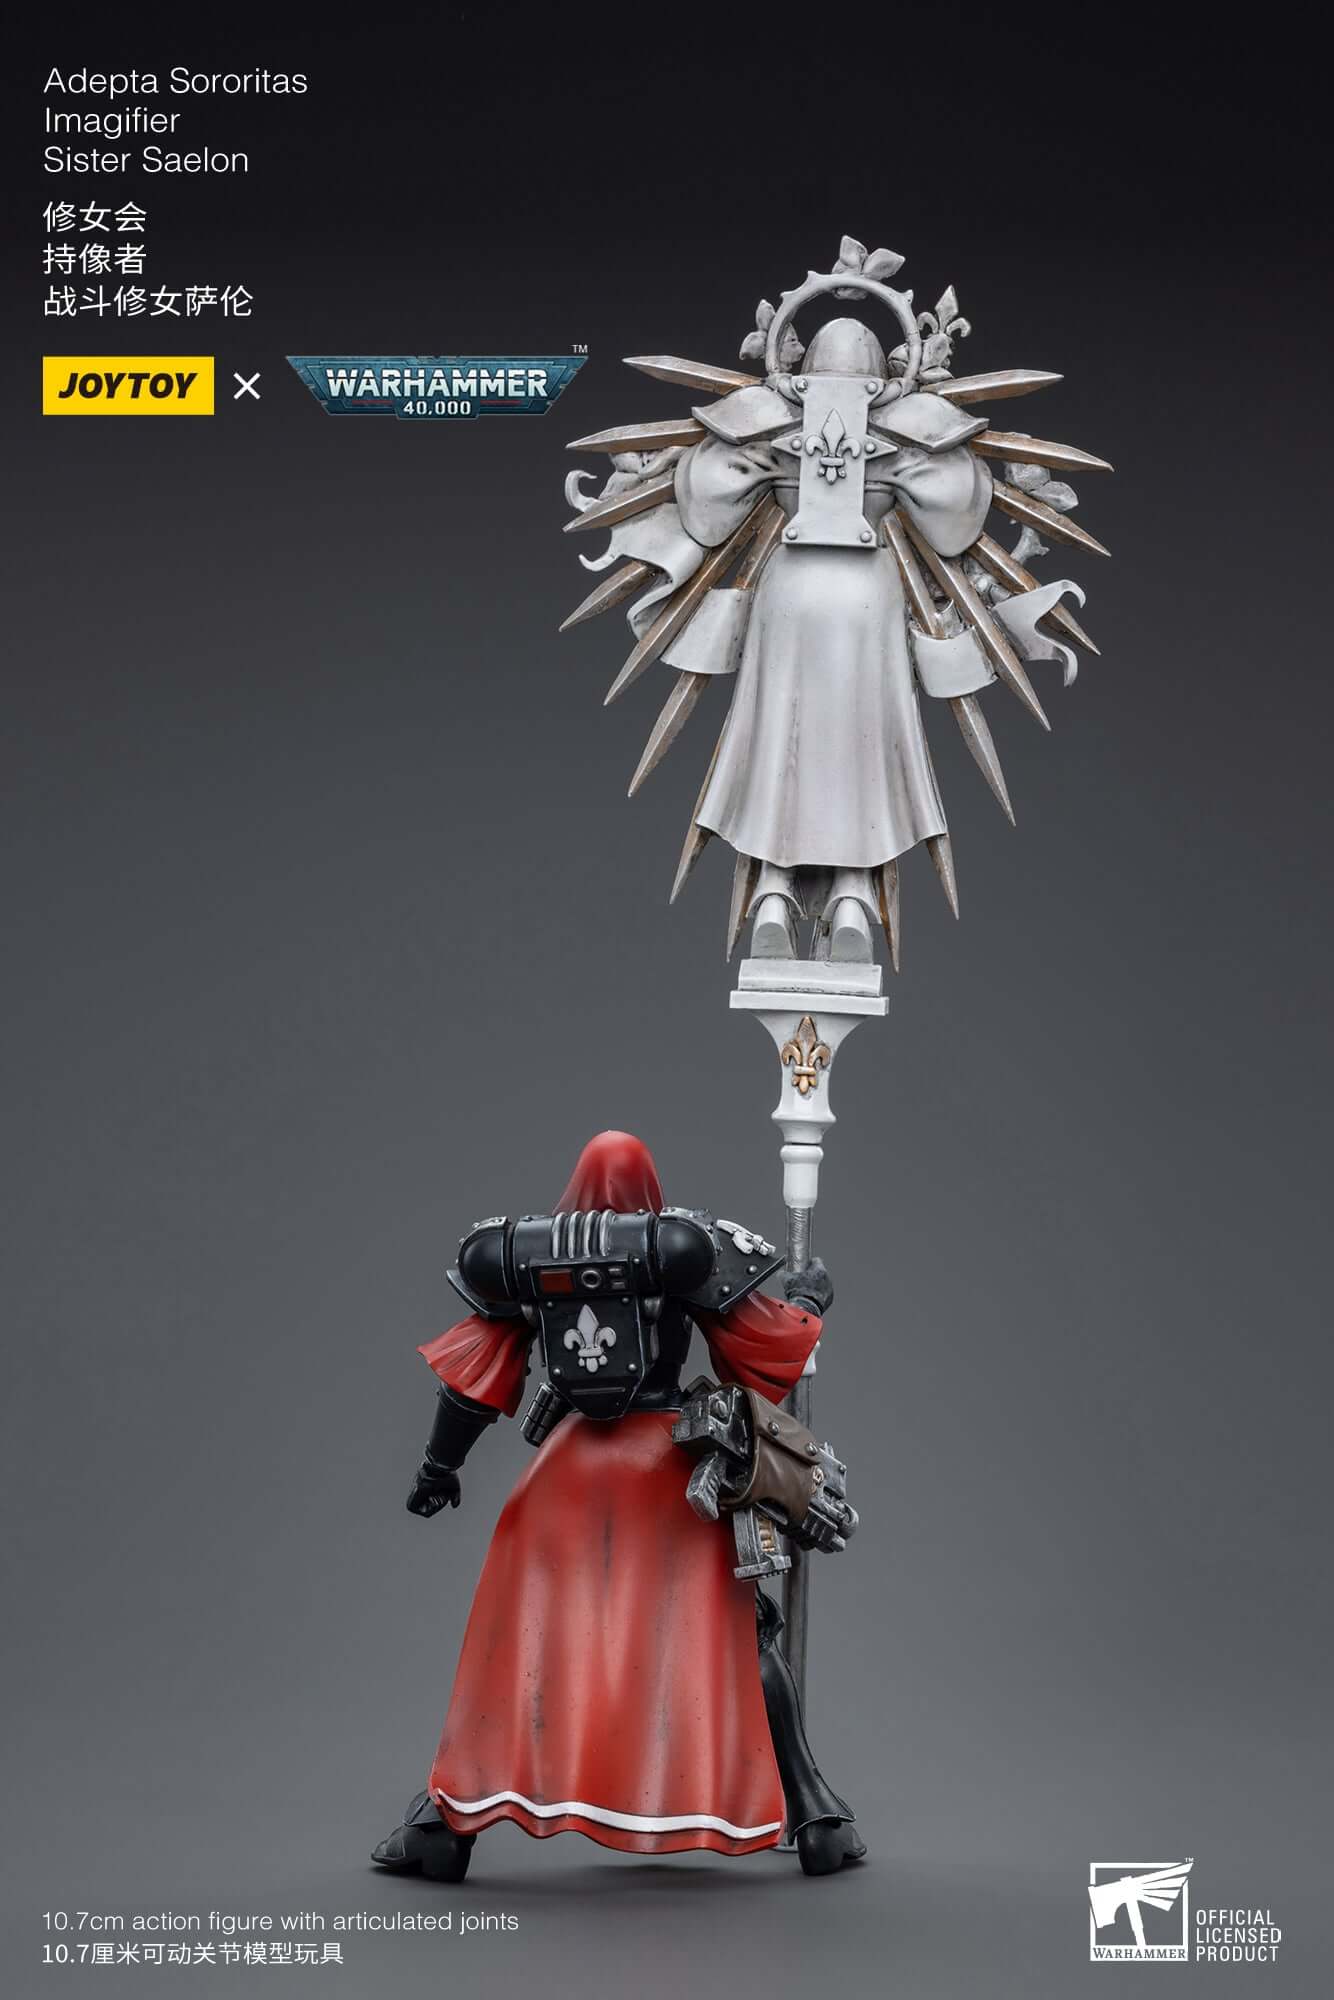 Adepta Sororitas lmagifier Sister Saelon - Warhammer 40K Action Figure By JOYTOY